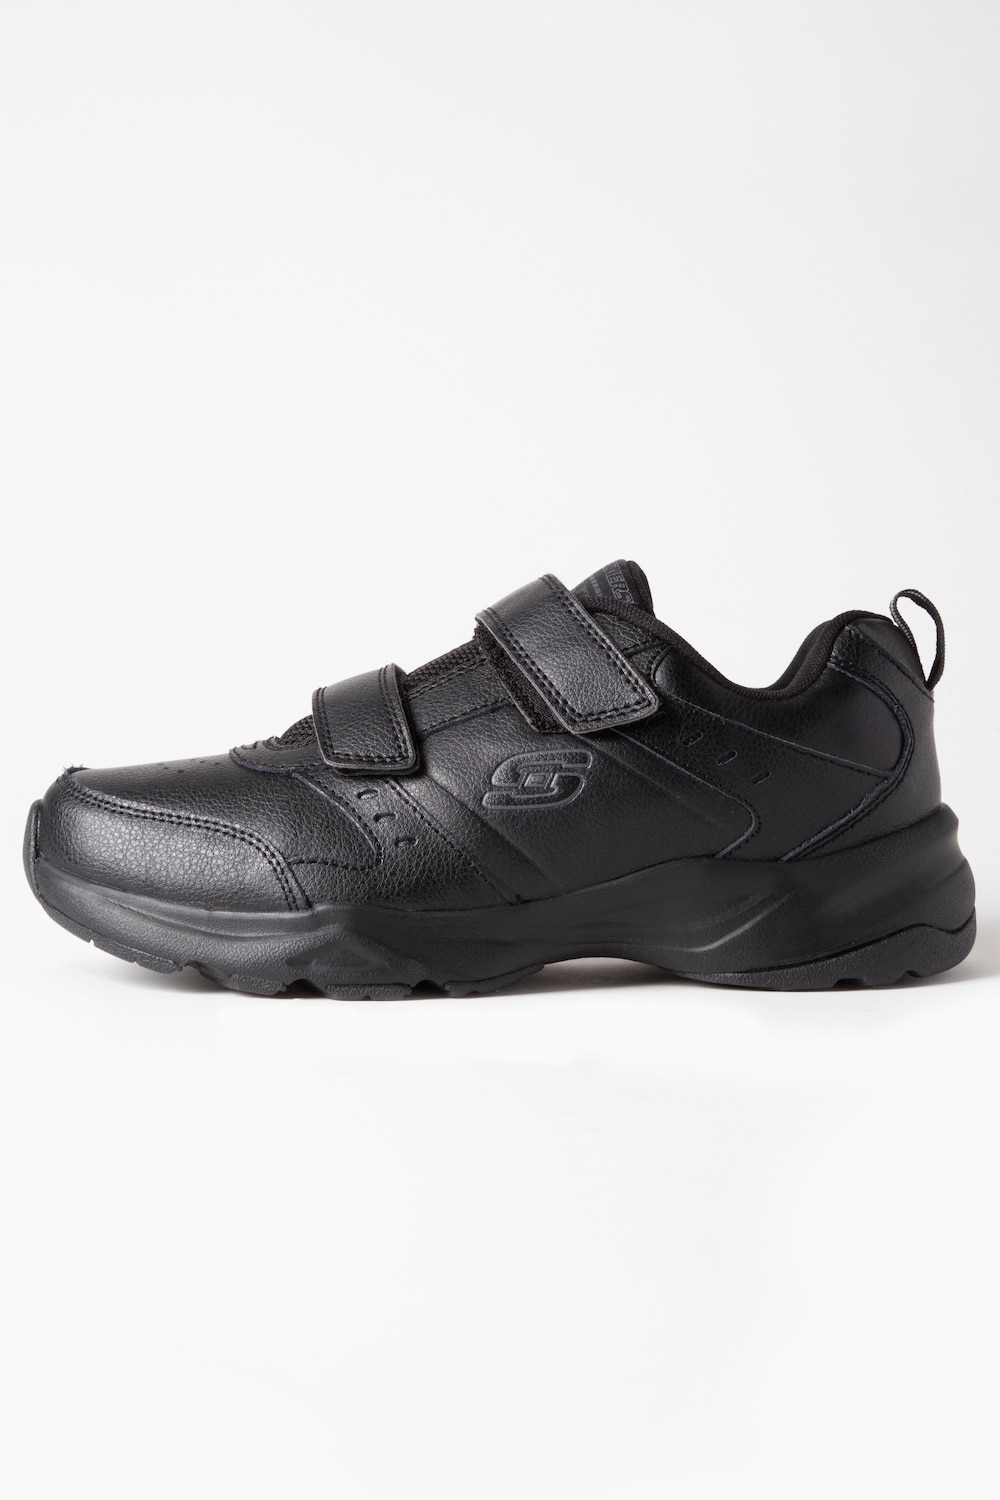 Plus Size Sneakers by Skechers, Man, black, size: 12,5, leather, JP1880